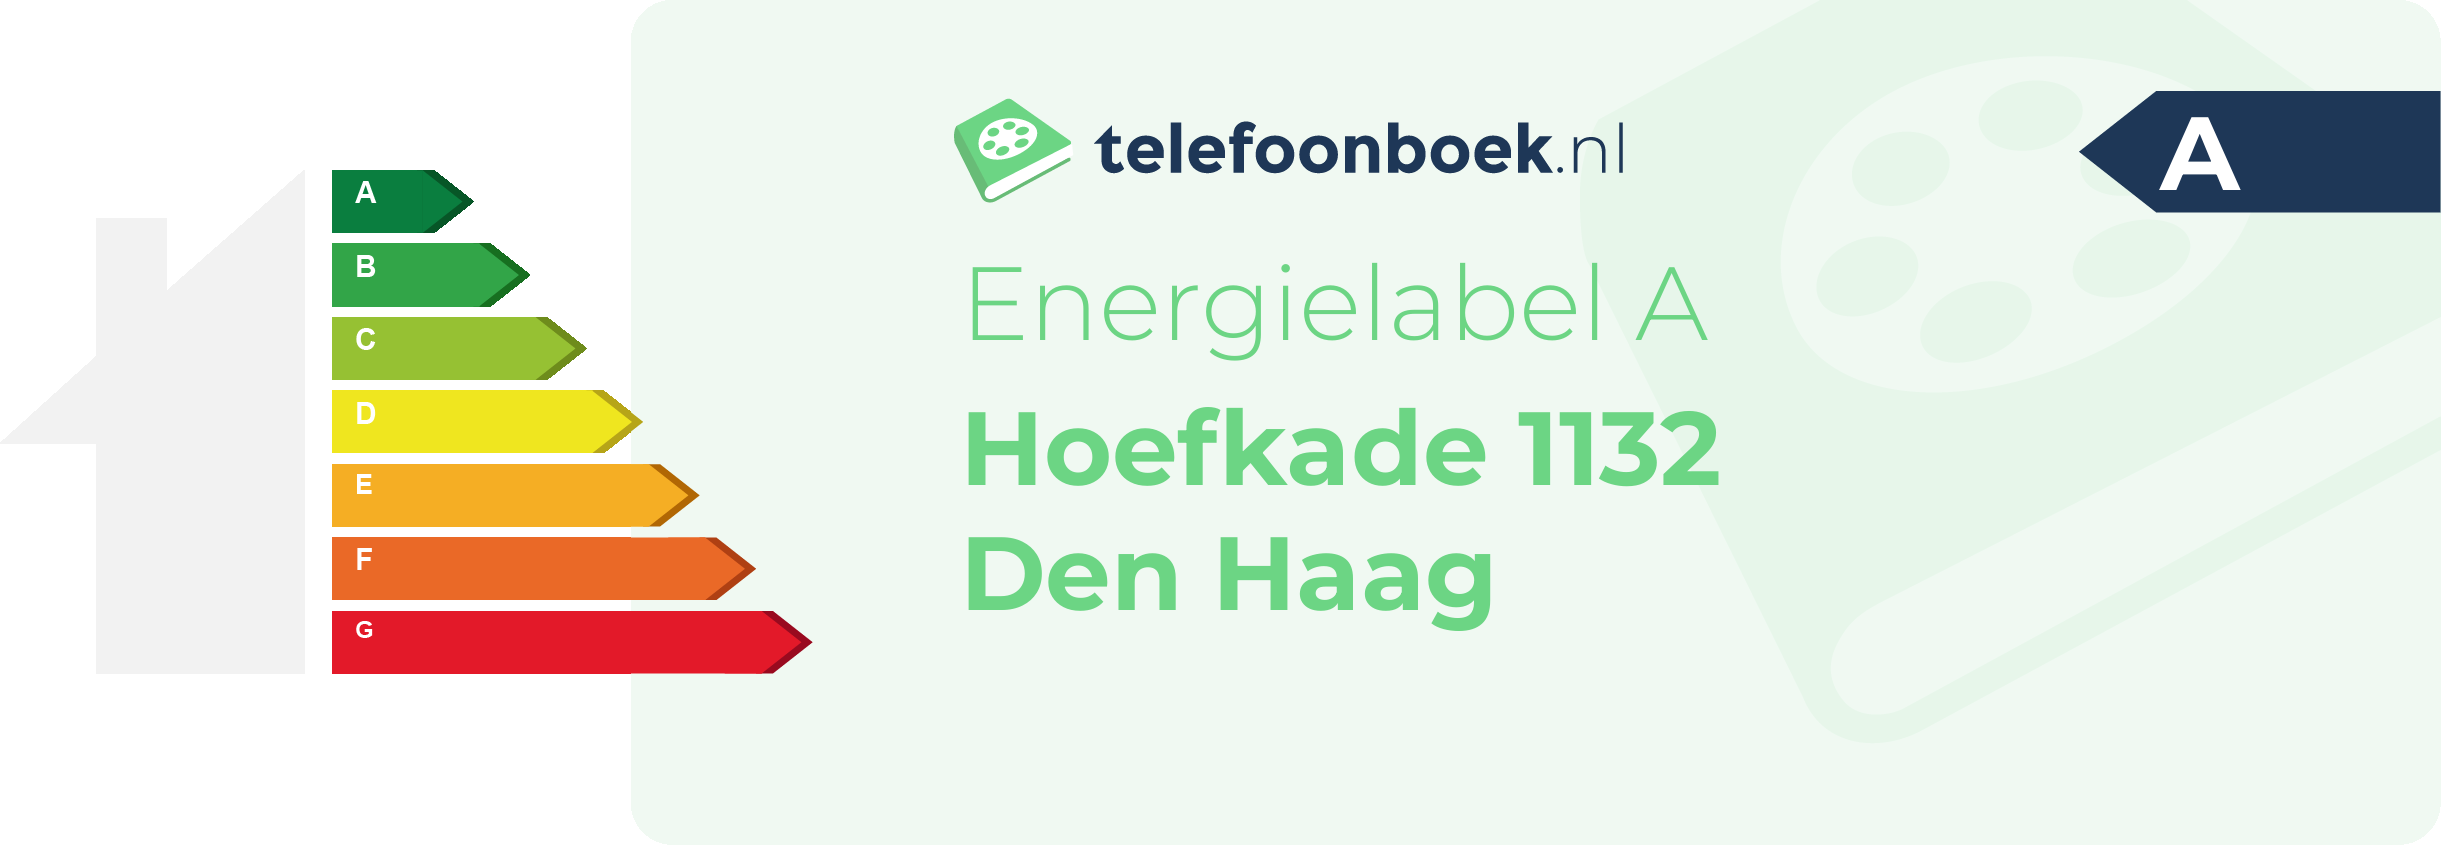 Energielabel Hoefkade 1132 Den Haag